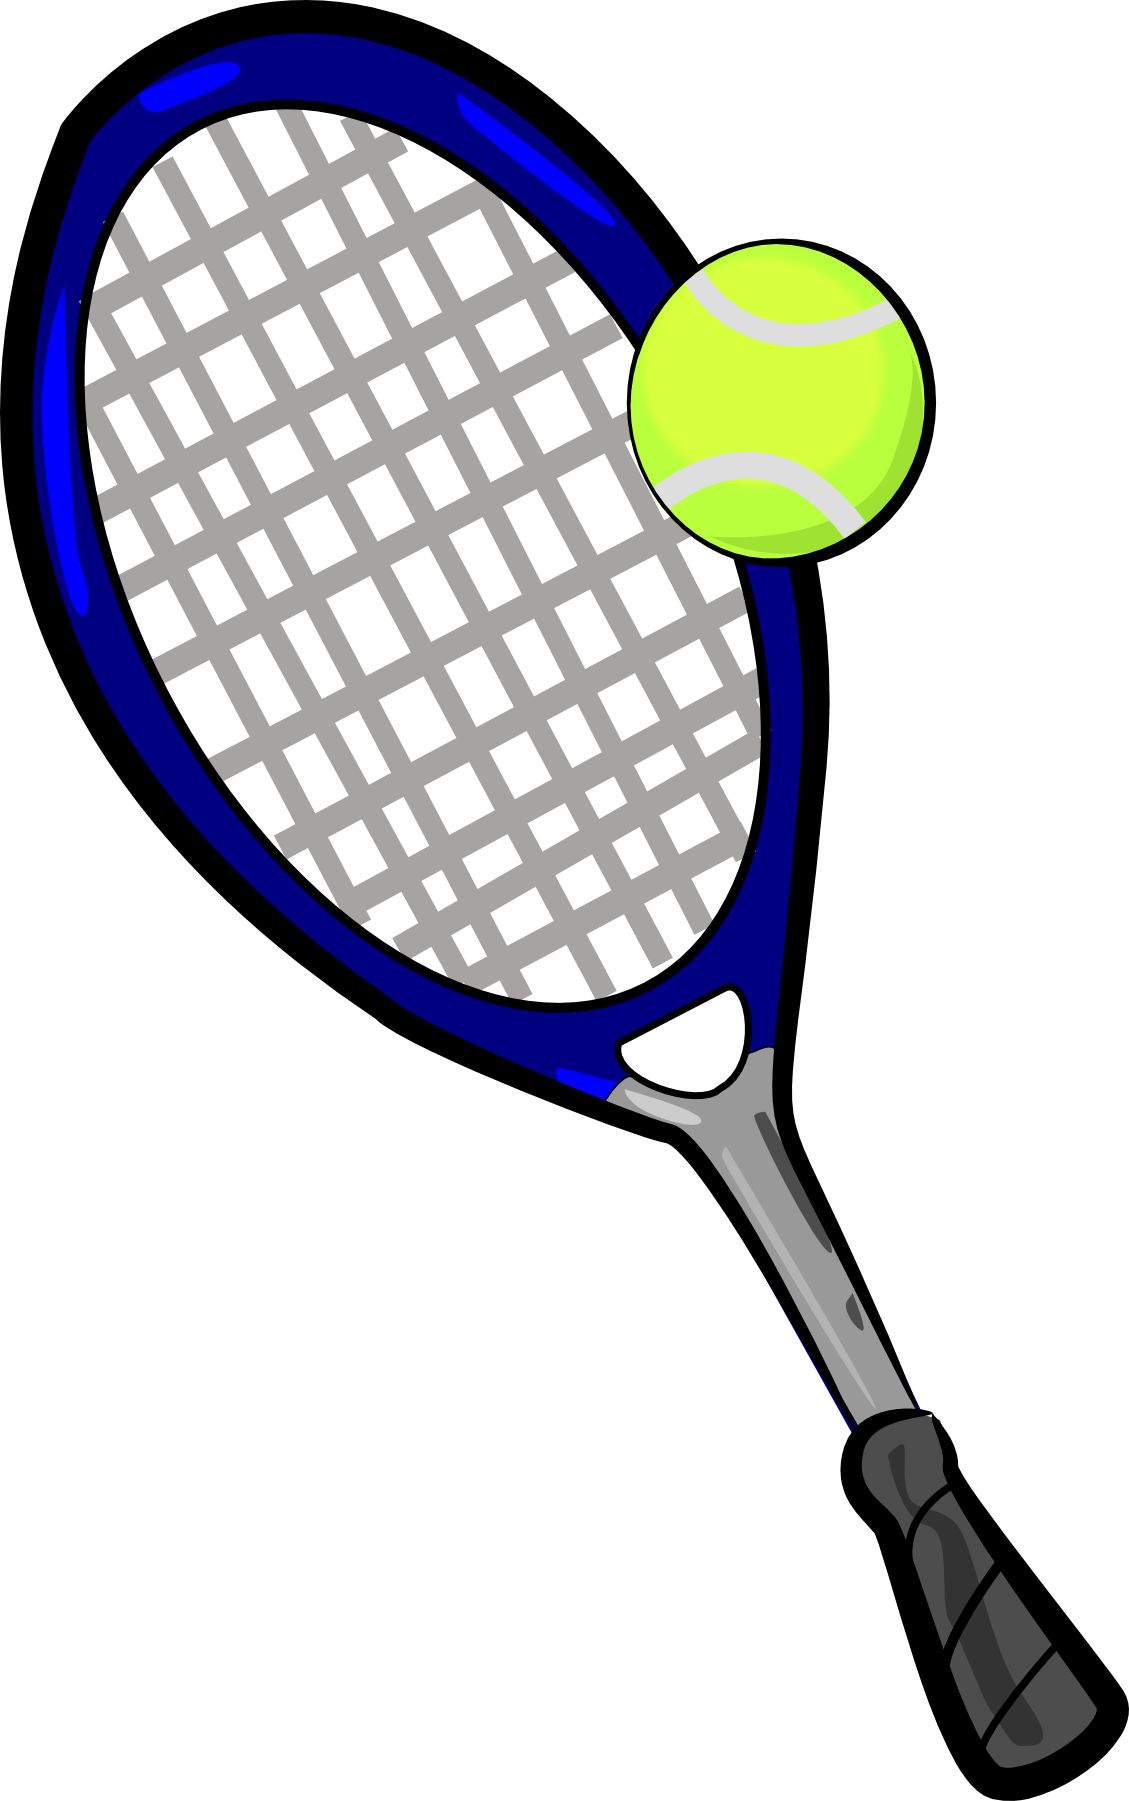 Tennis Racket Silhouette imag